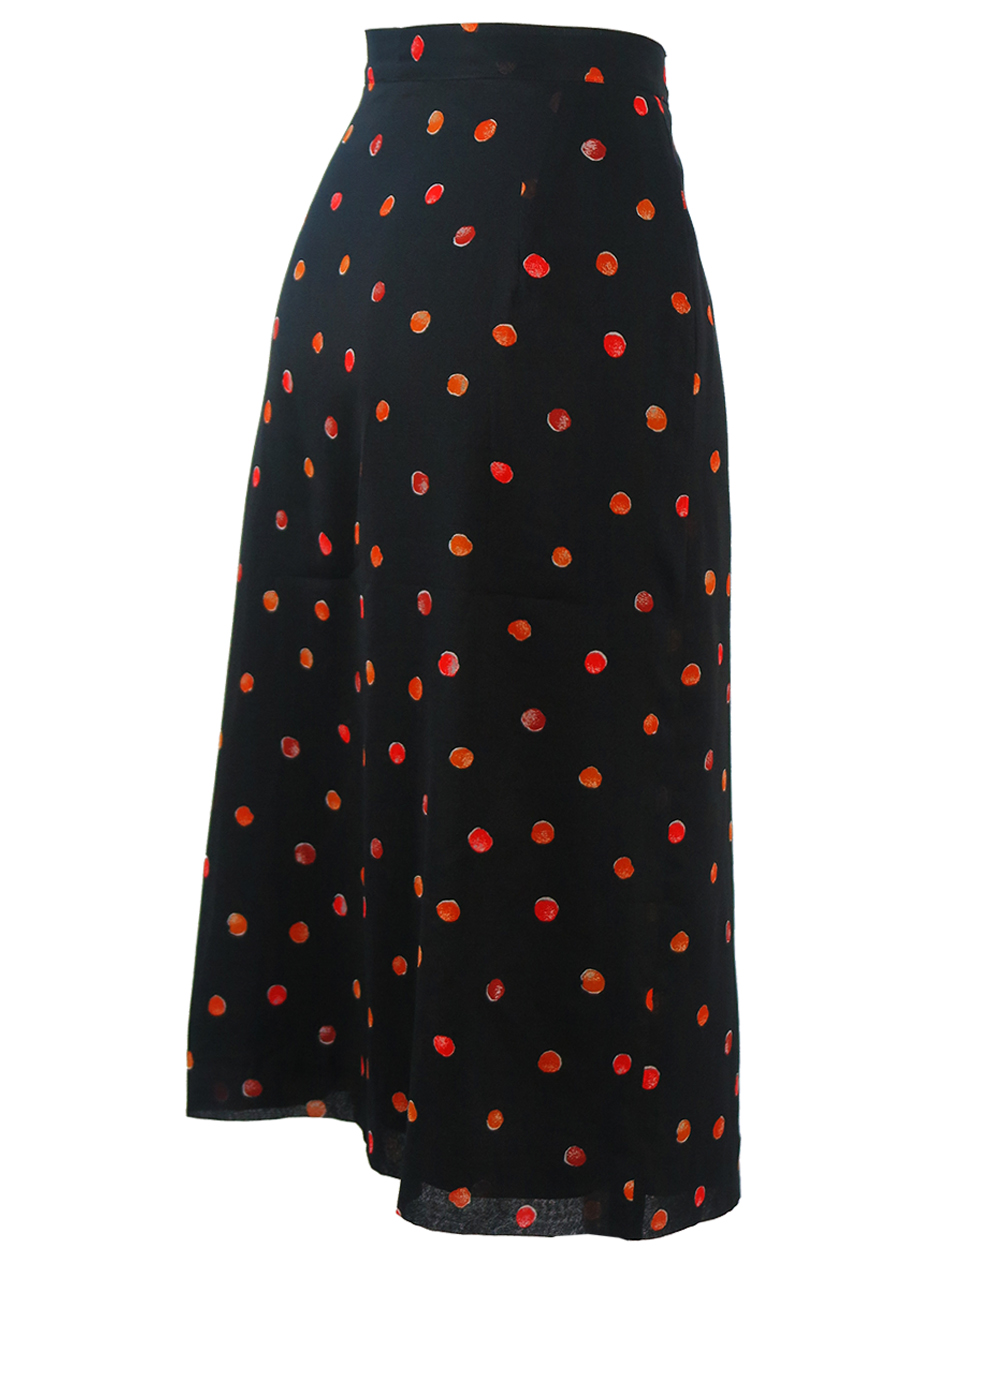 Black Midi Skirt with Red & Orange Abstract Polka Dot Pattern - L ...